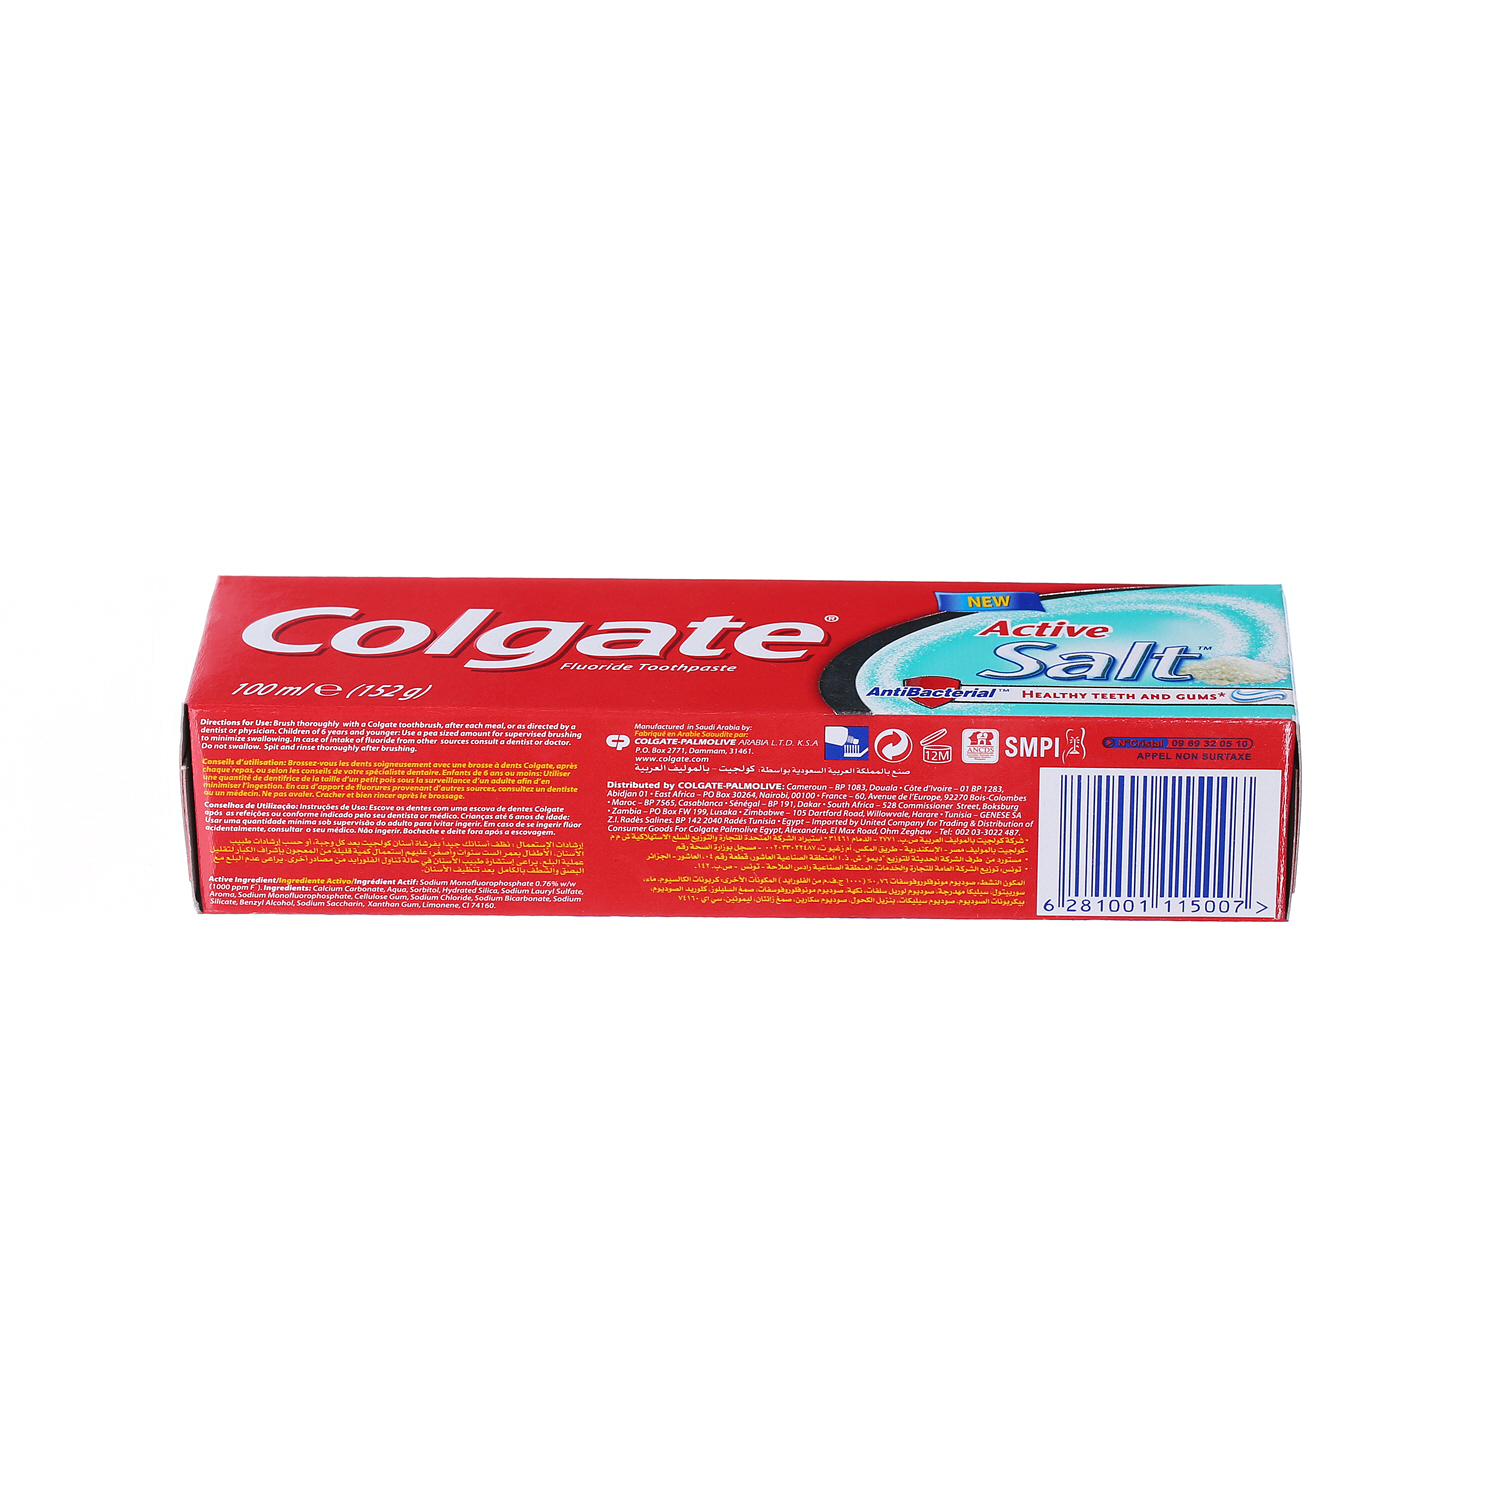 Colgate Active Salt Toothpaste 100ml